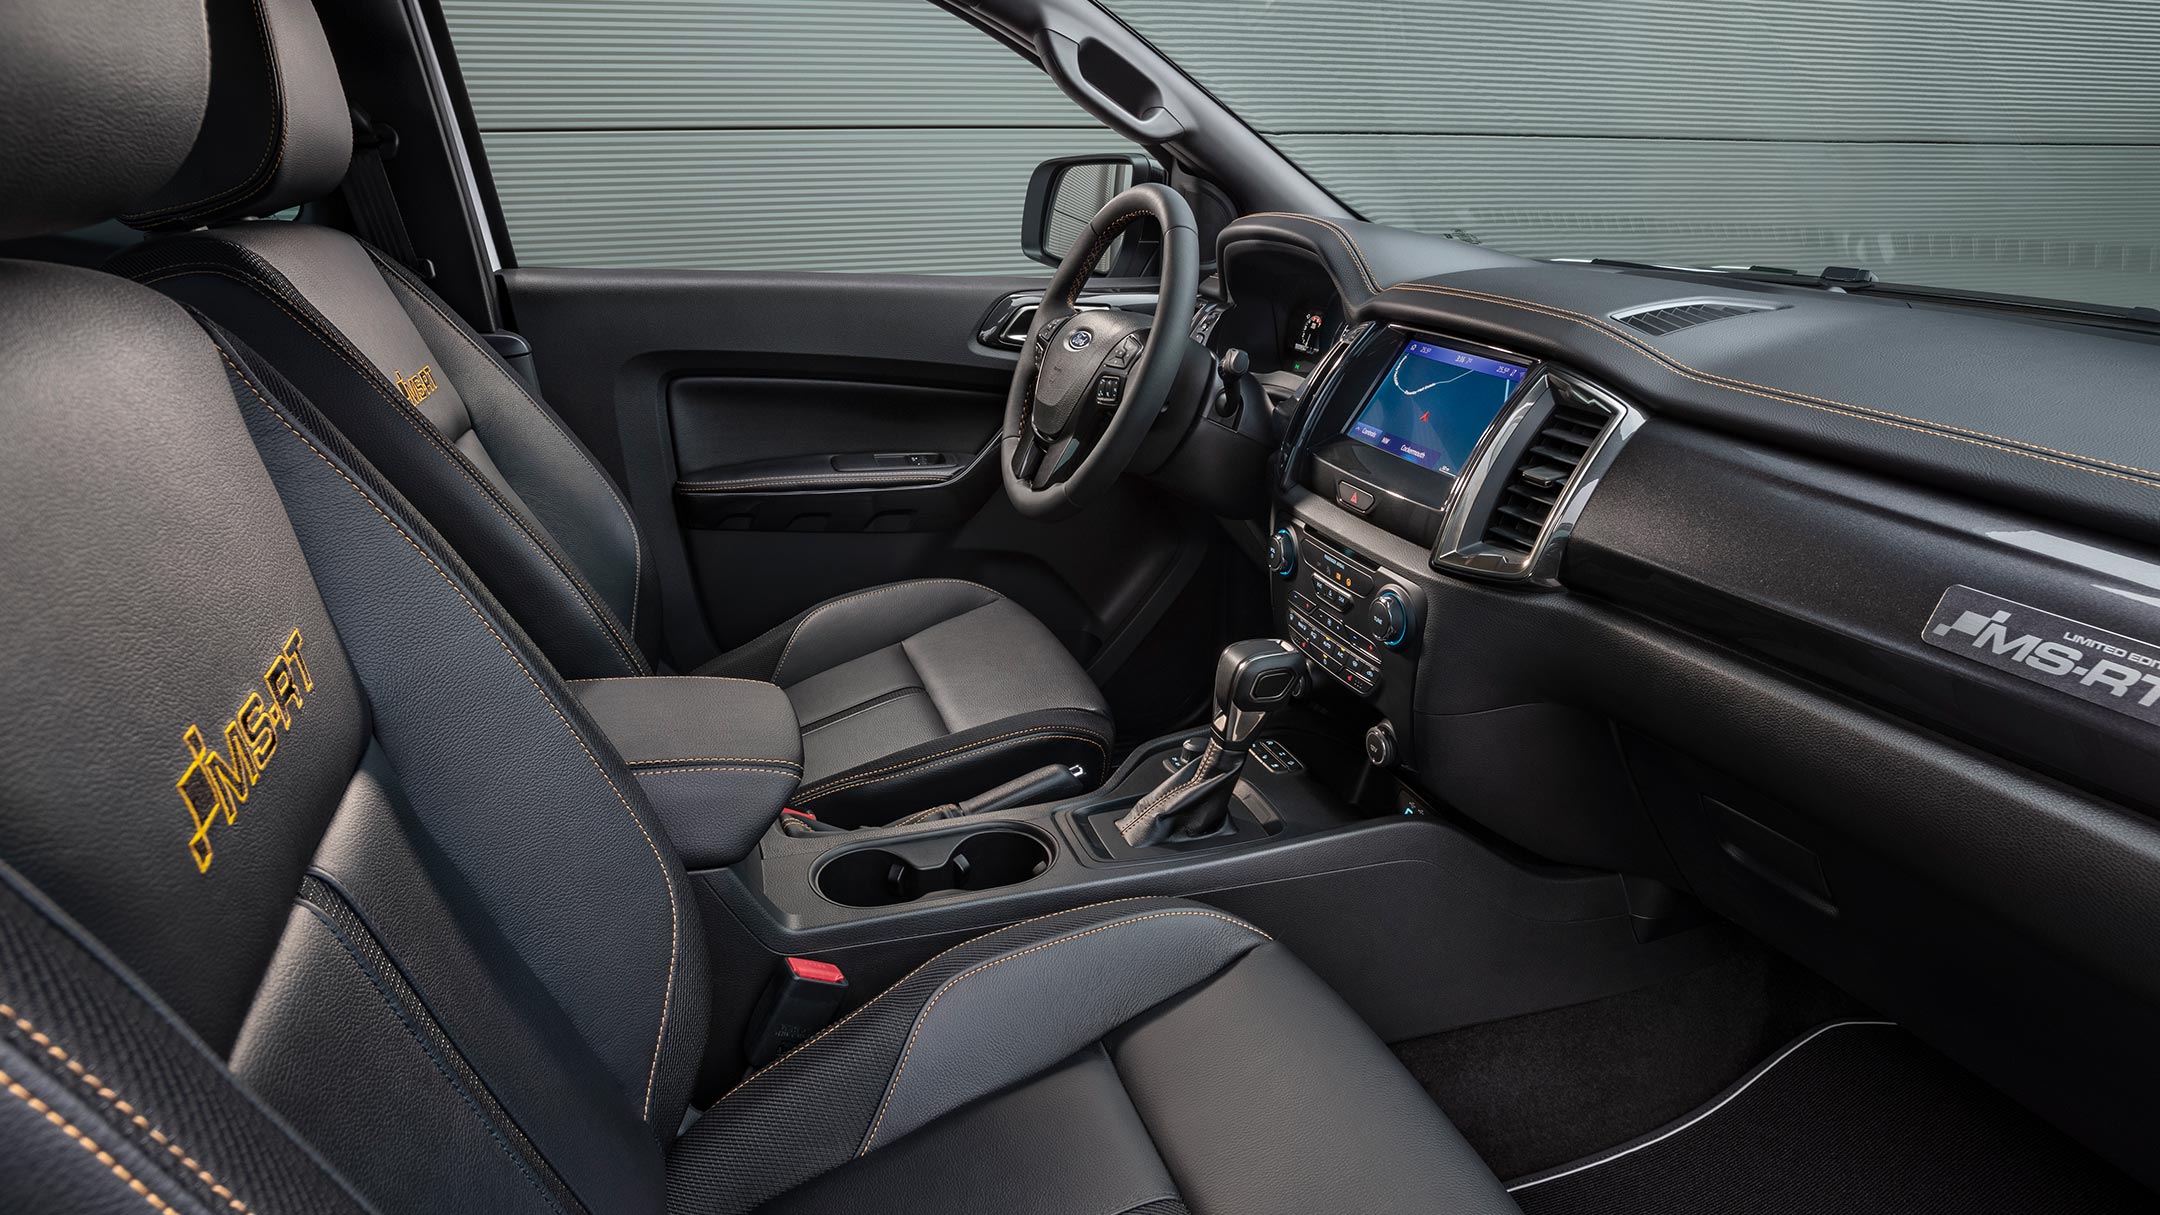 Ford Ranger Super Cab interior